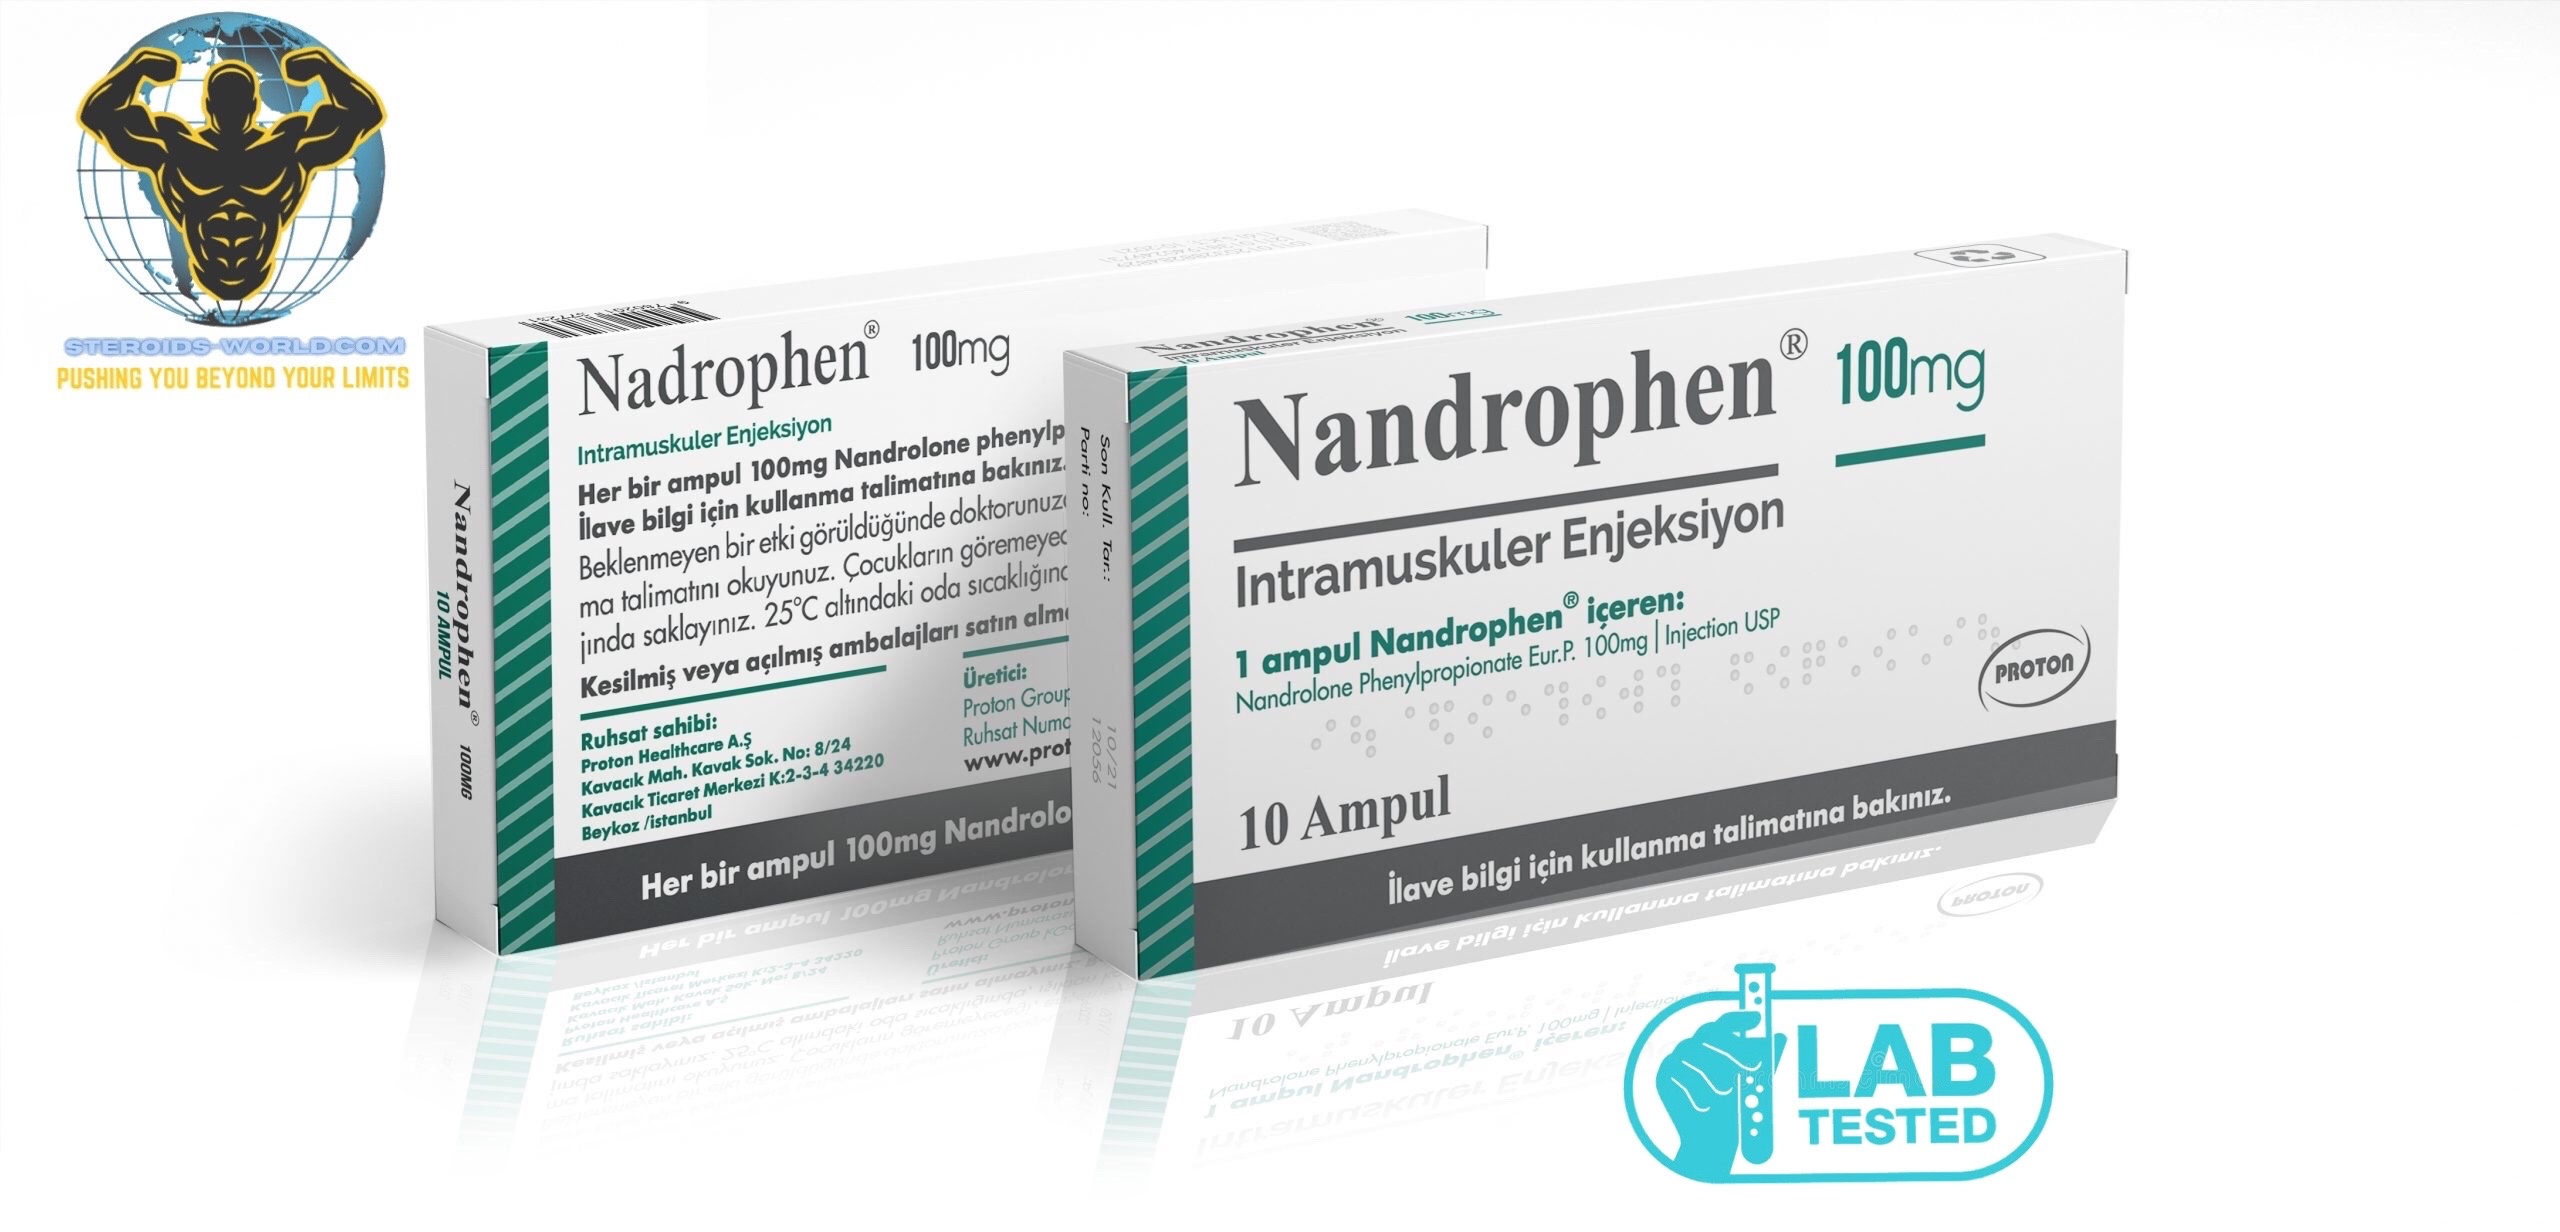 Buy Nandrolone Phenylpropionate 100mg